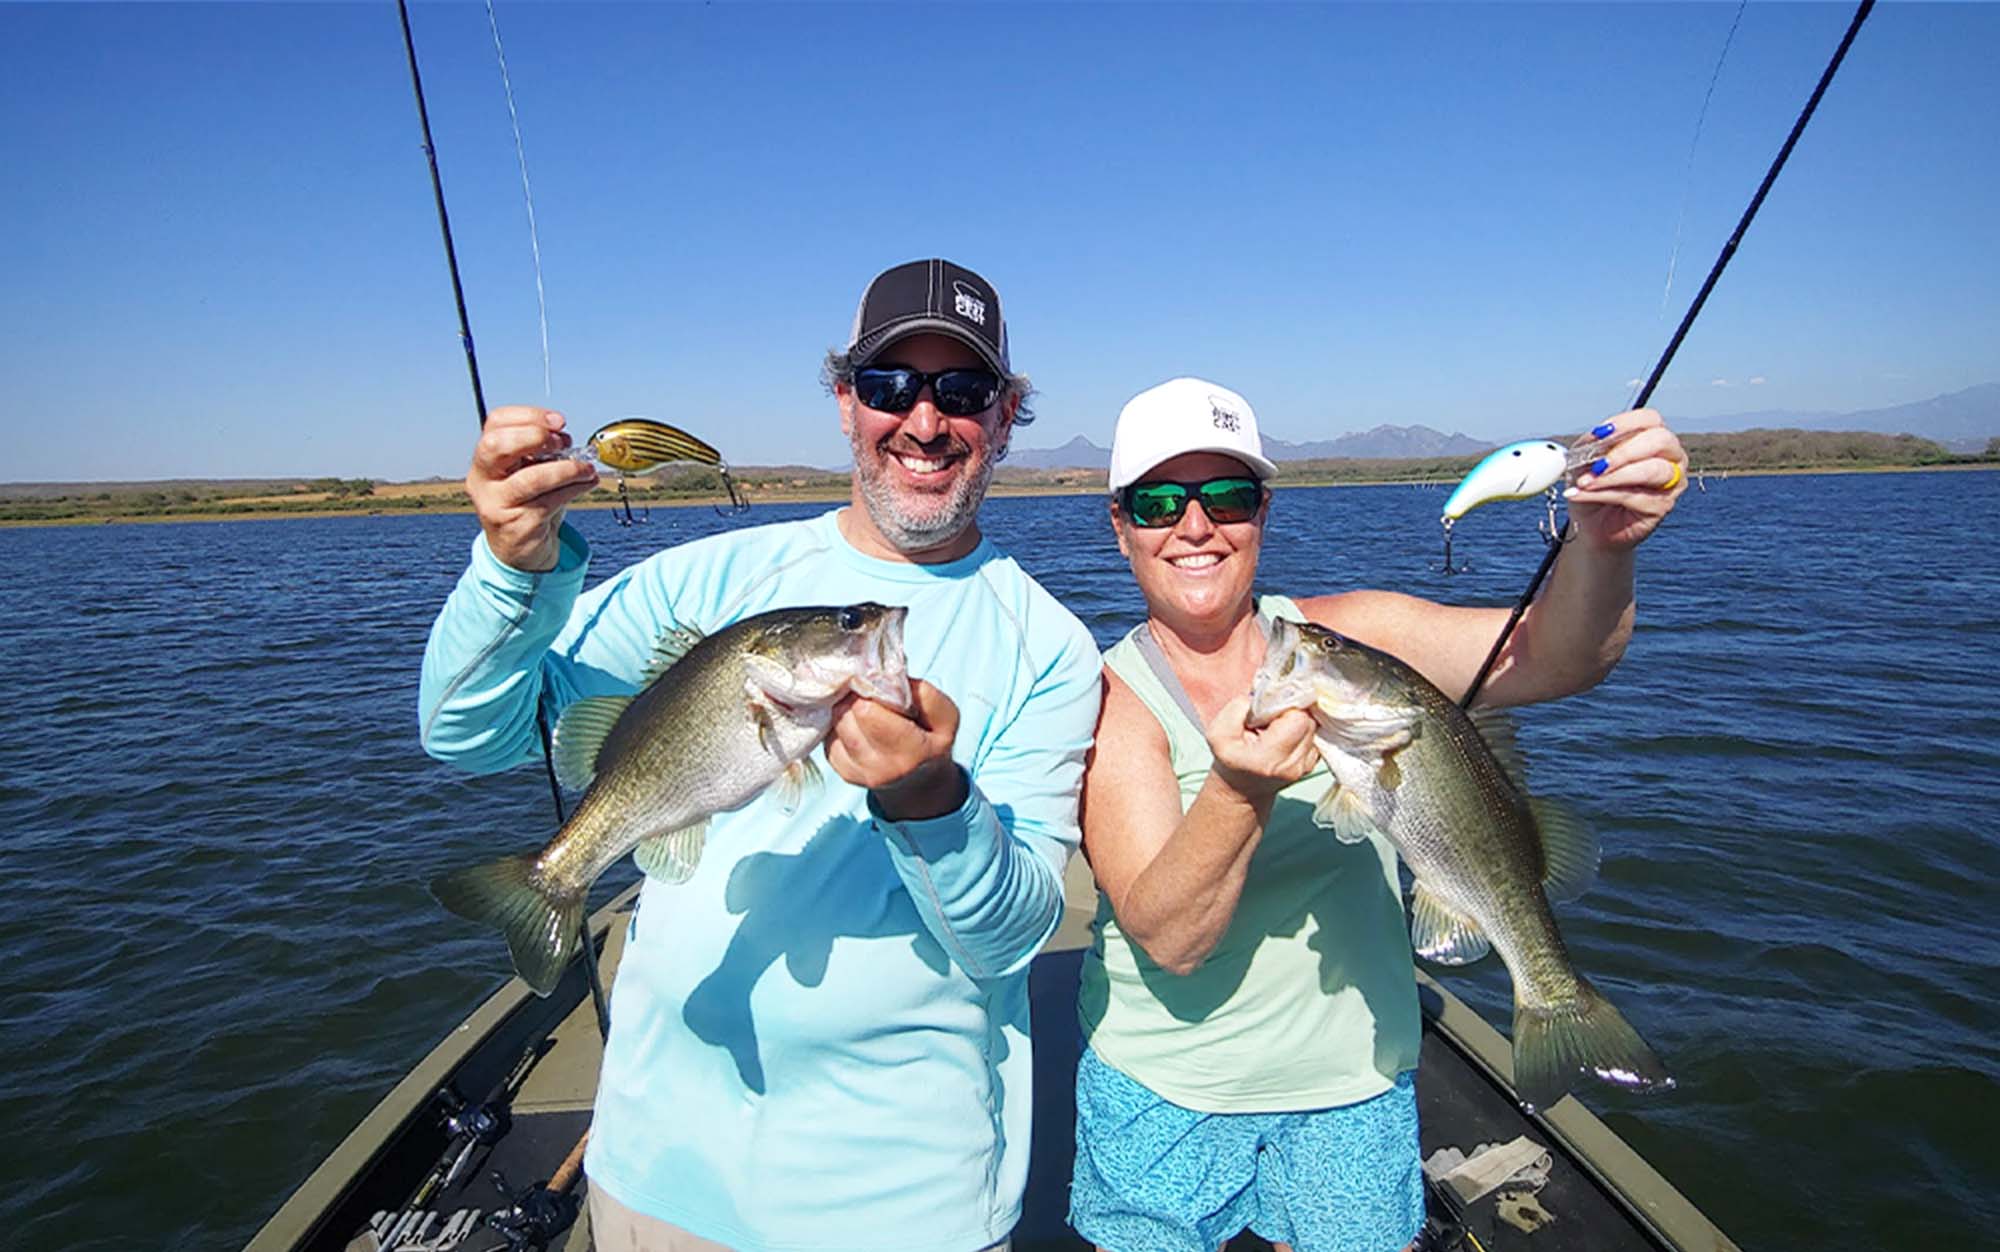 1 Dosen - Fishing Gear and Equipment, Tackle Bass Lure Fish Stuff